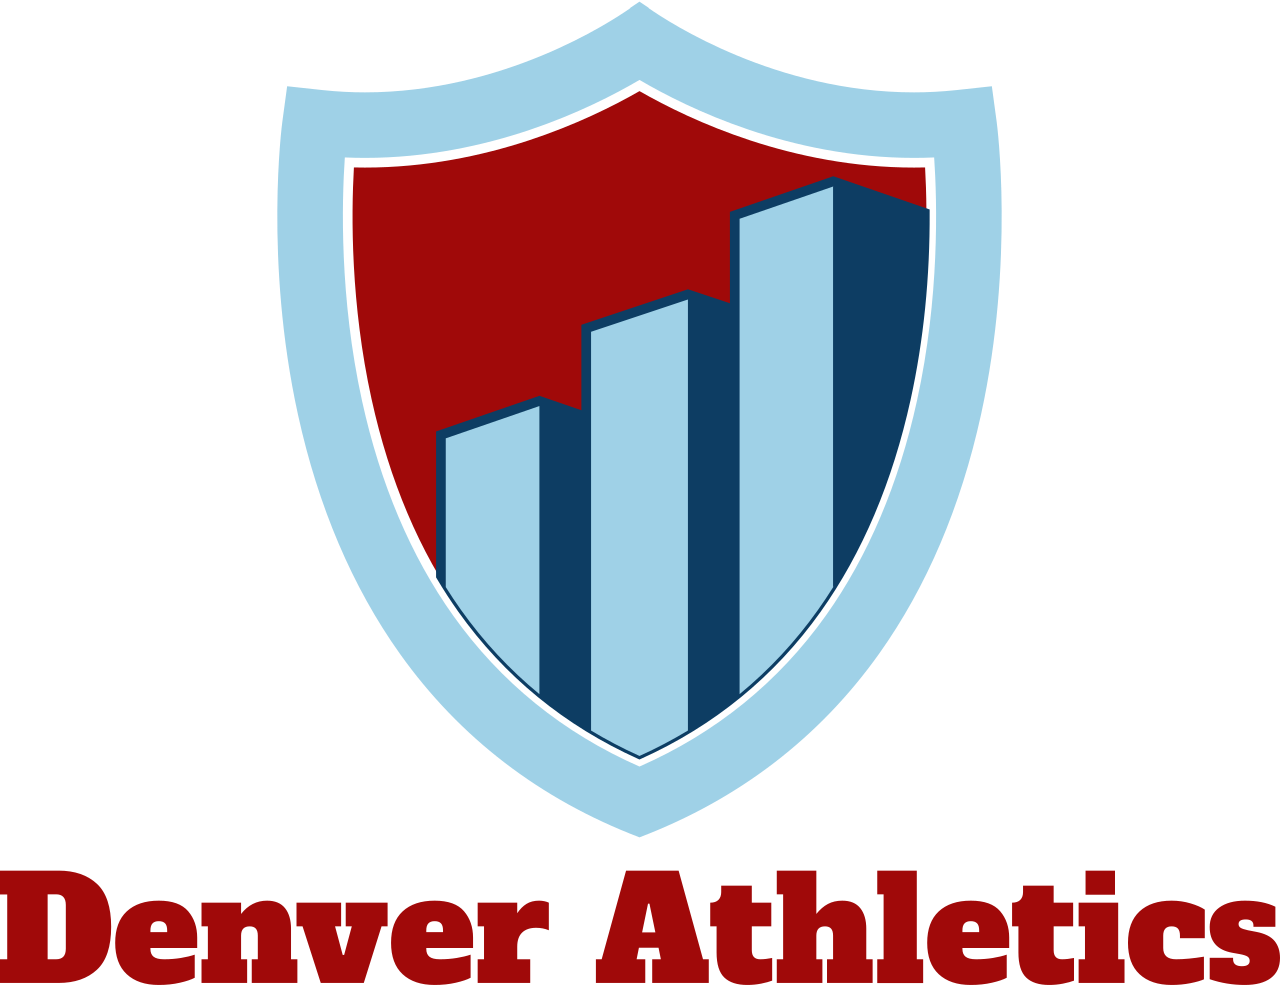 Denver Athletics's logo